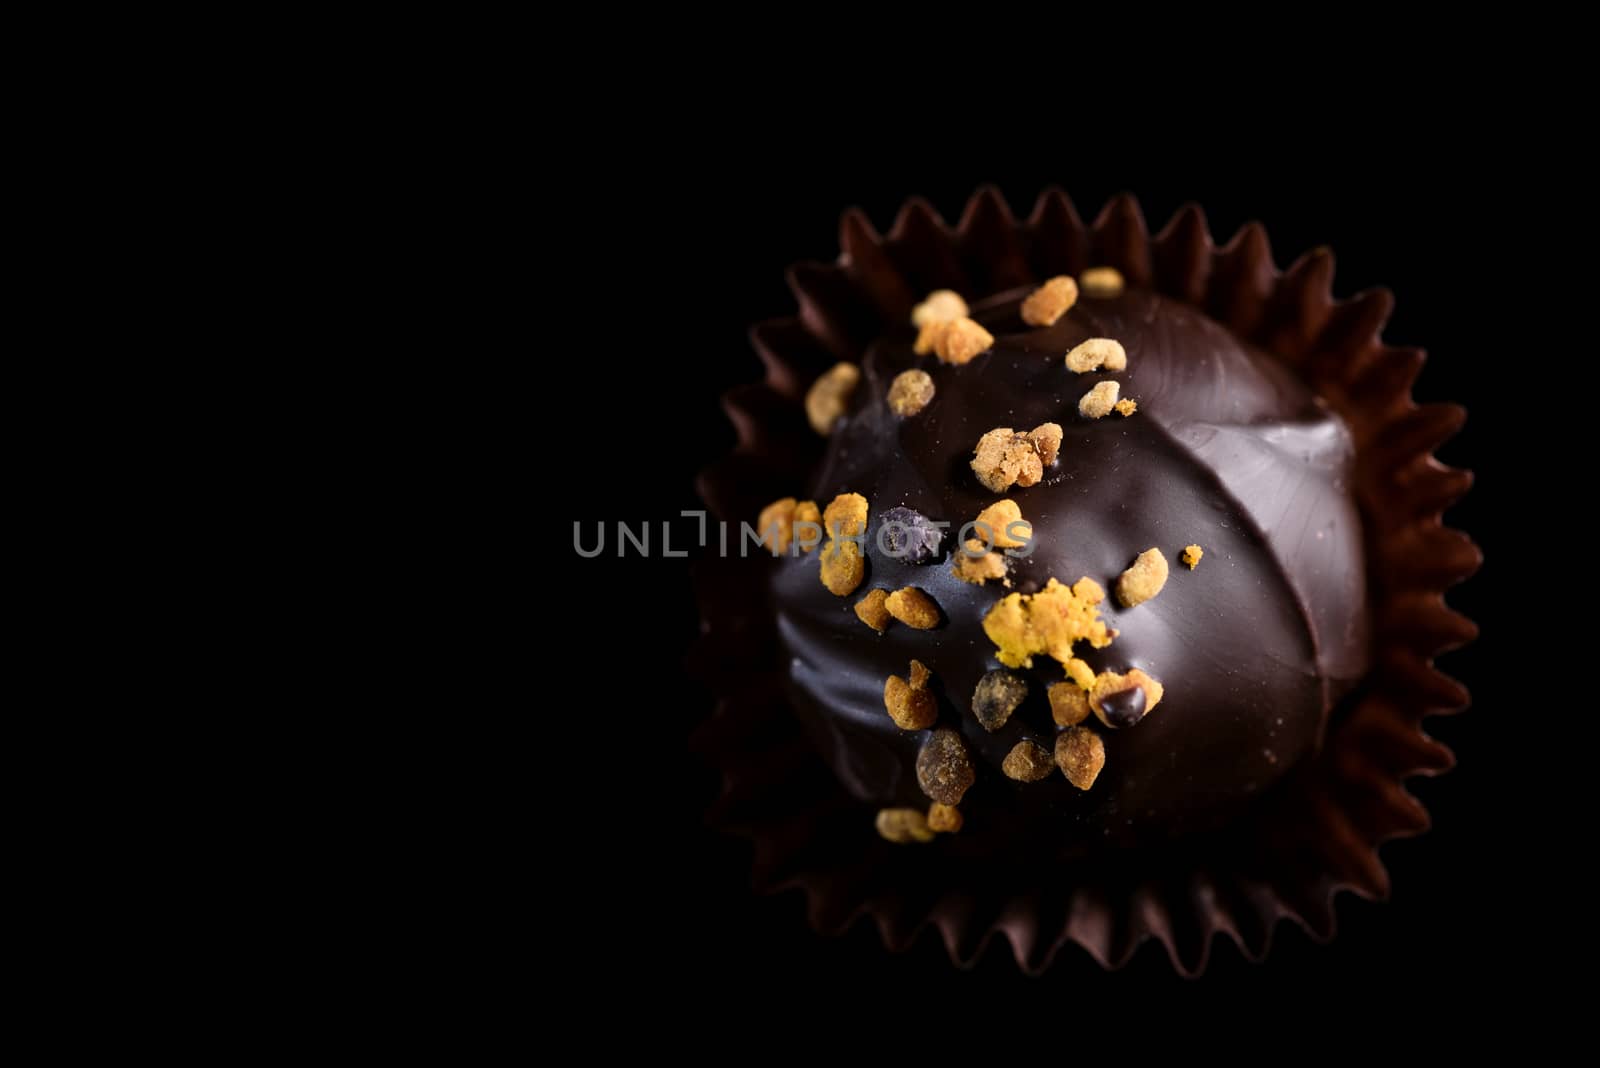 One Single Handmade Chocolate Praline Close Up View. Dark Background with Copy Space.